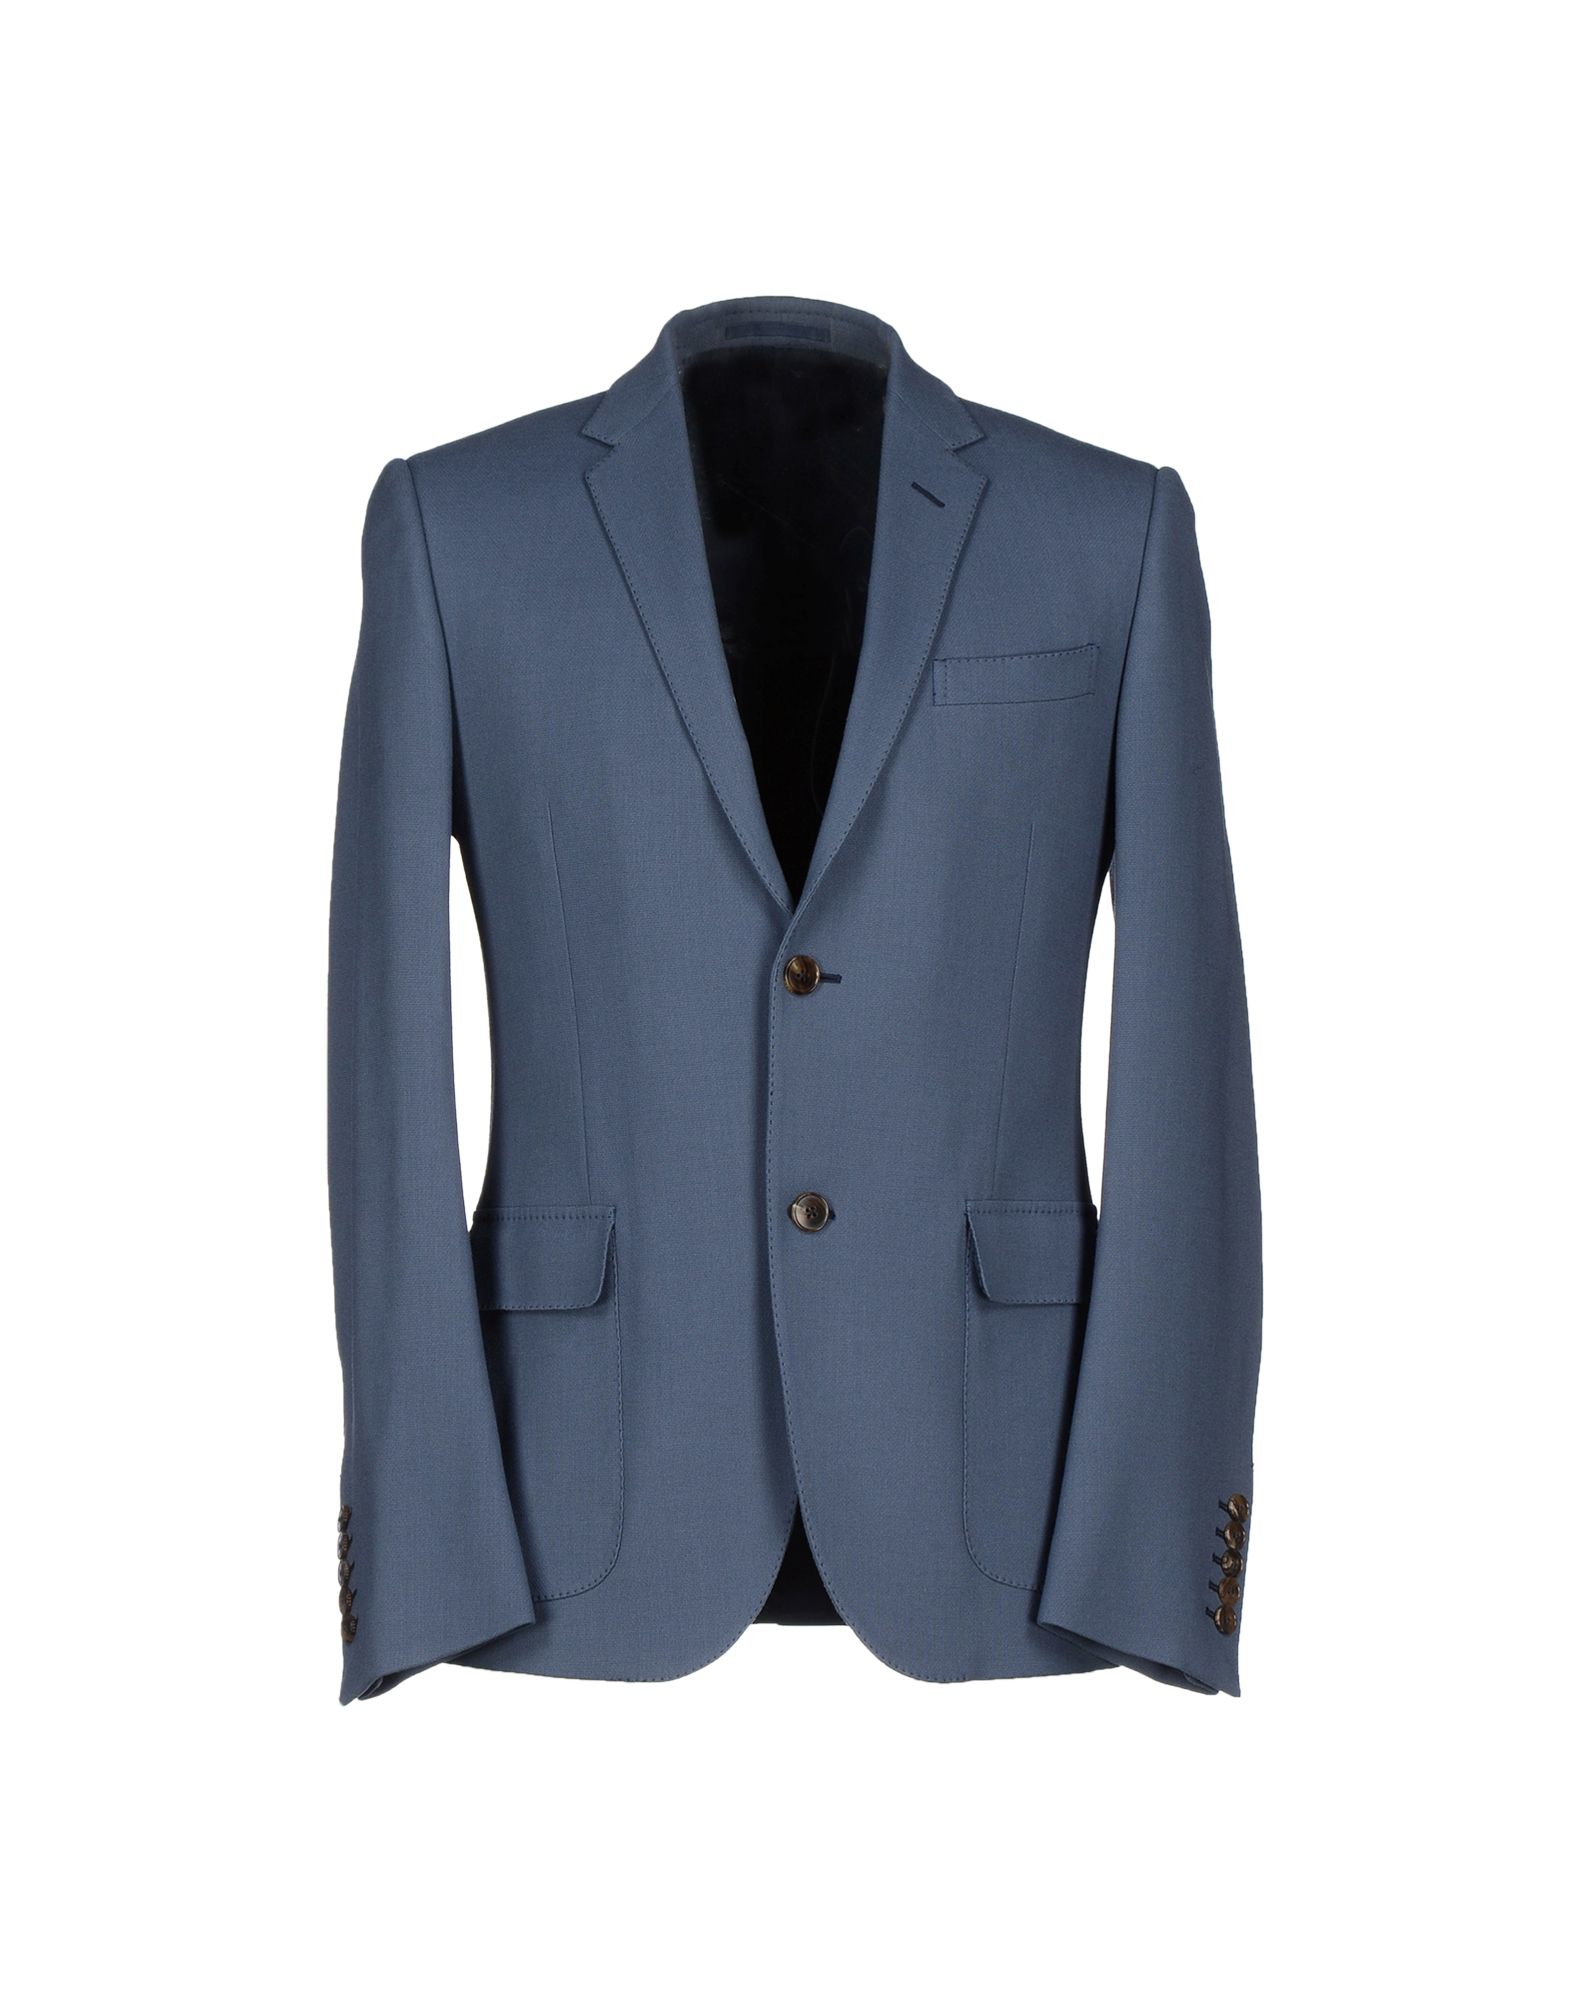 Gucci Blazer in Blue for Men (Slate blue) - Save 48% | Lyst